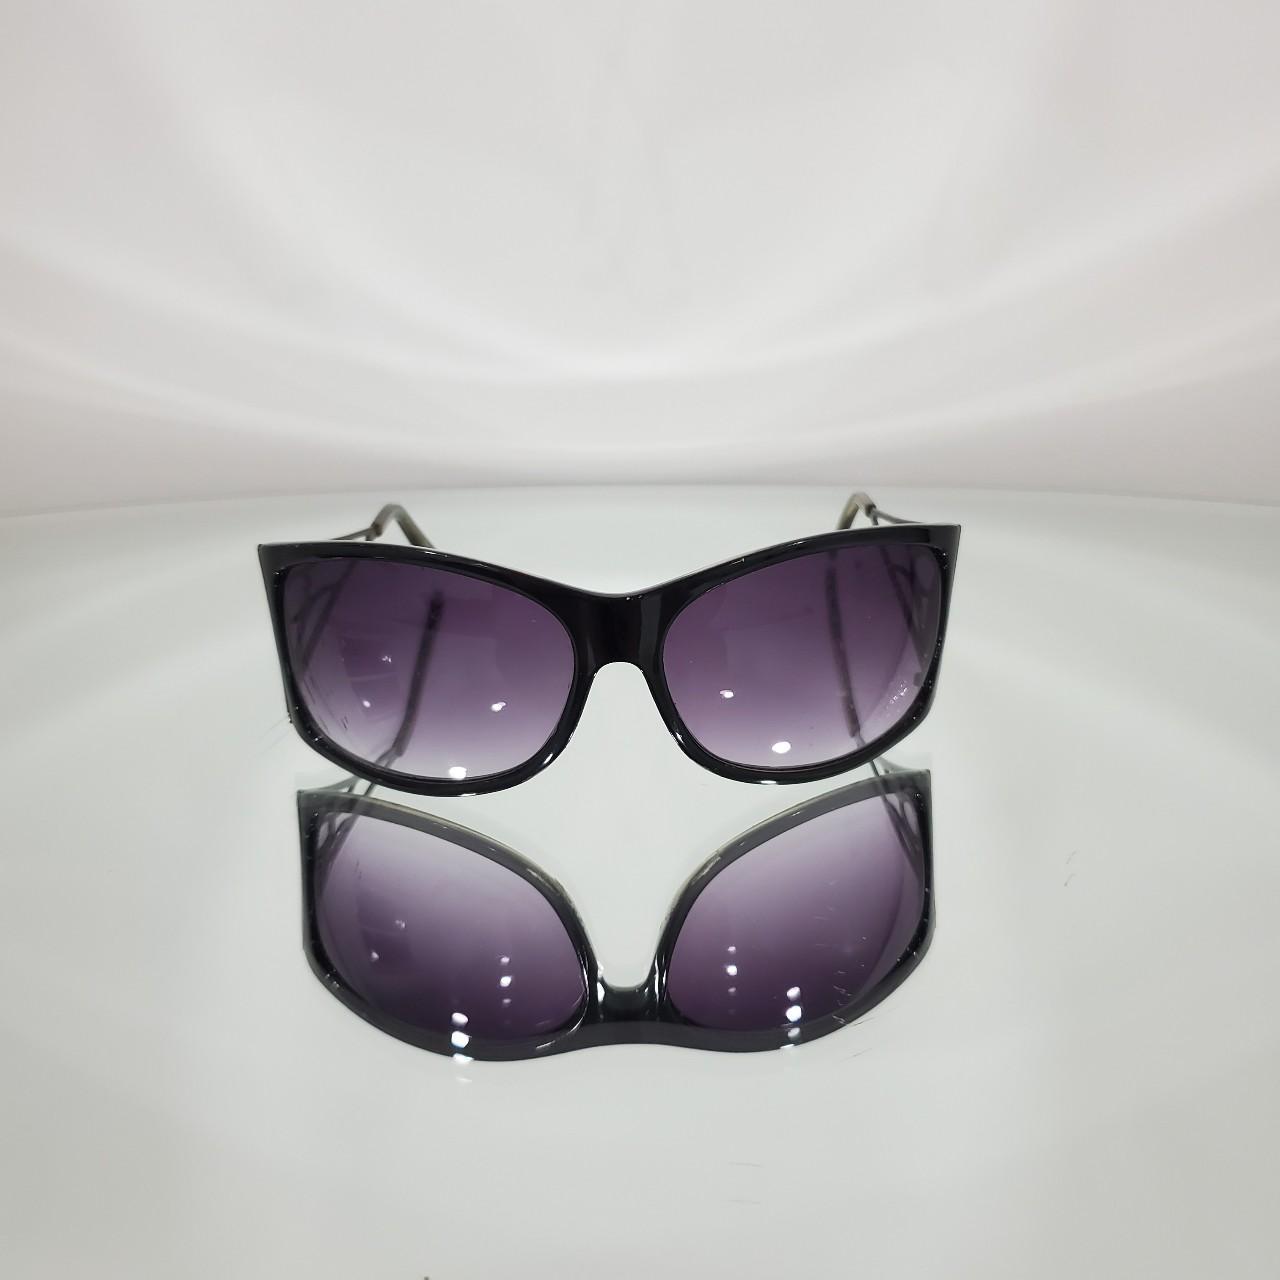 Women's Black and Silver Sunglasses (5)